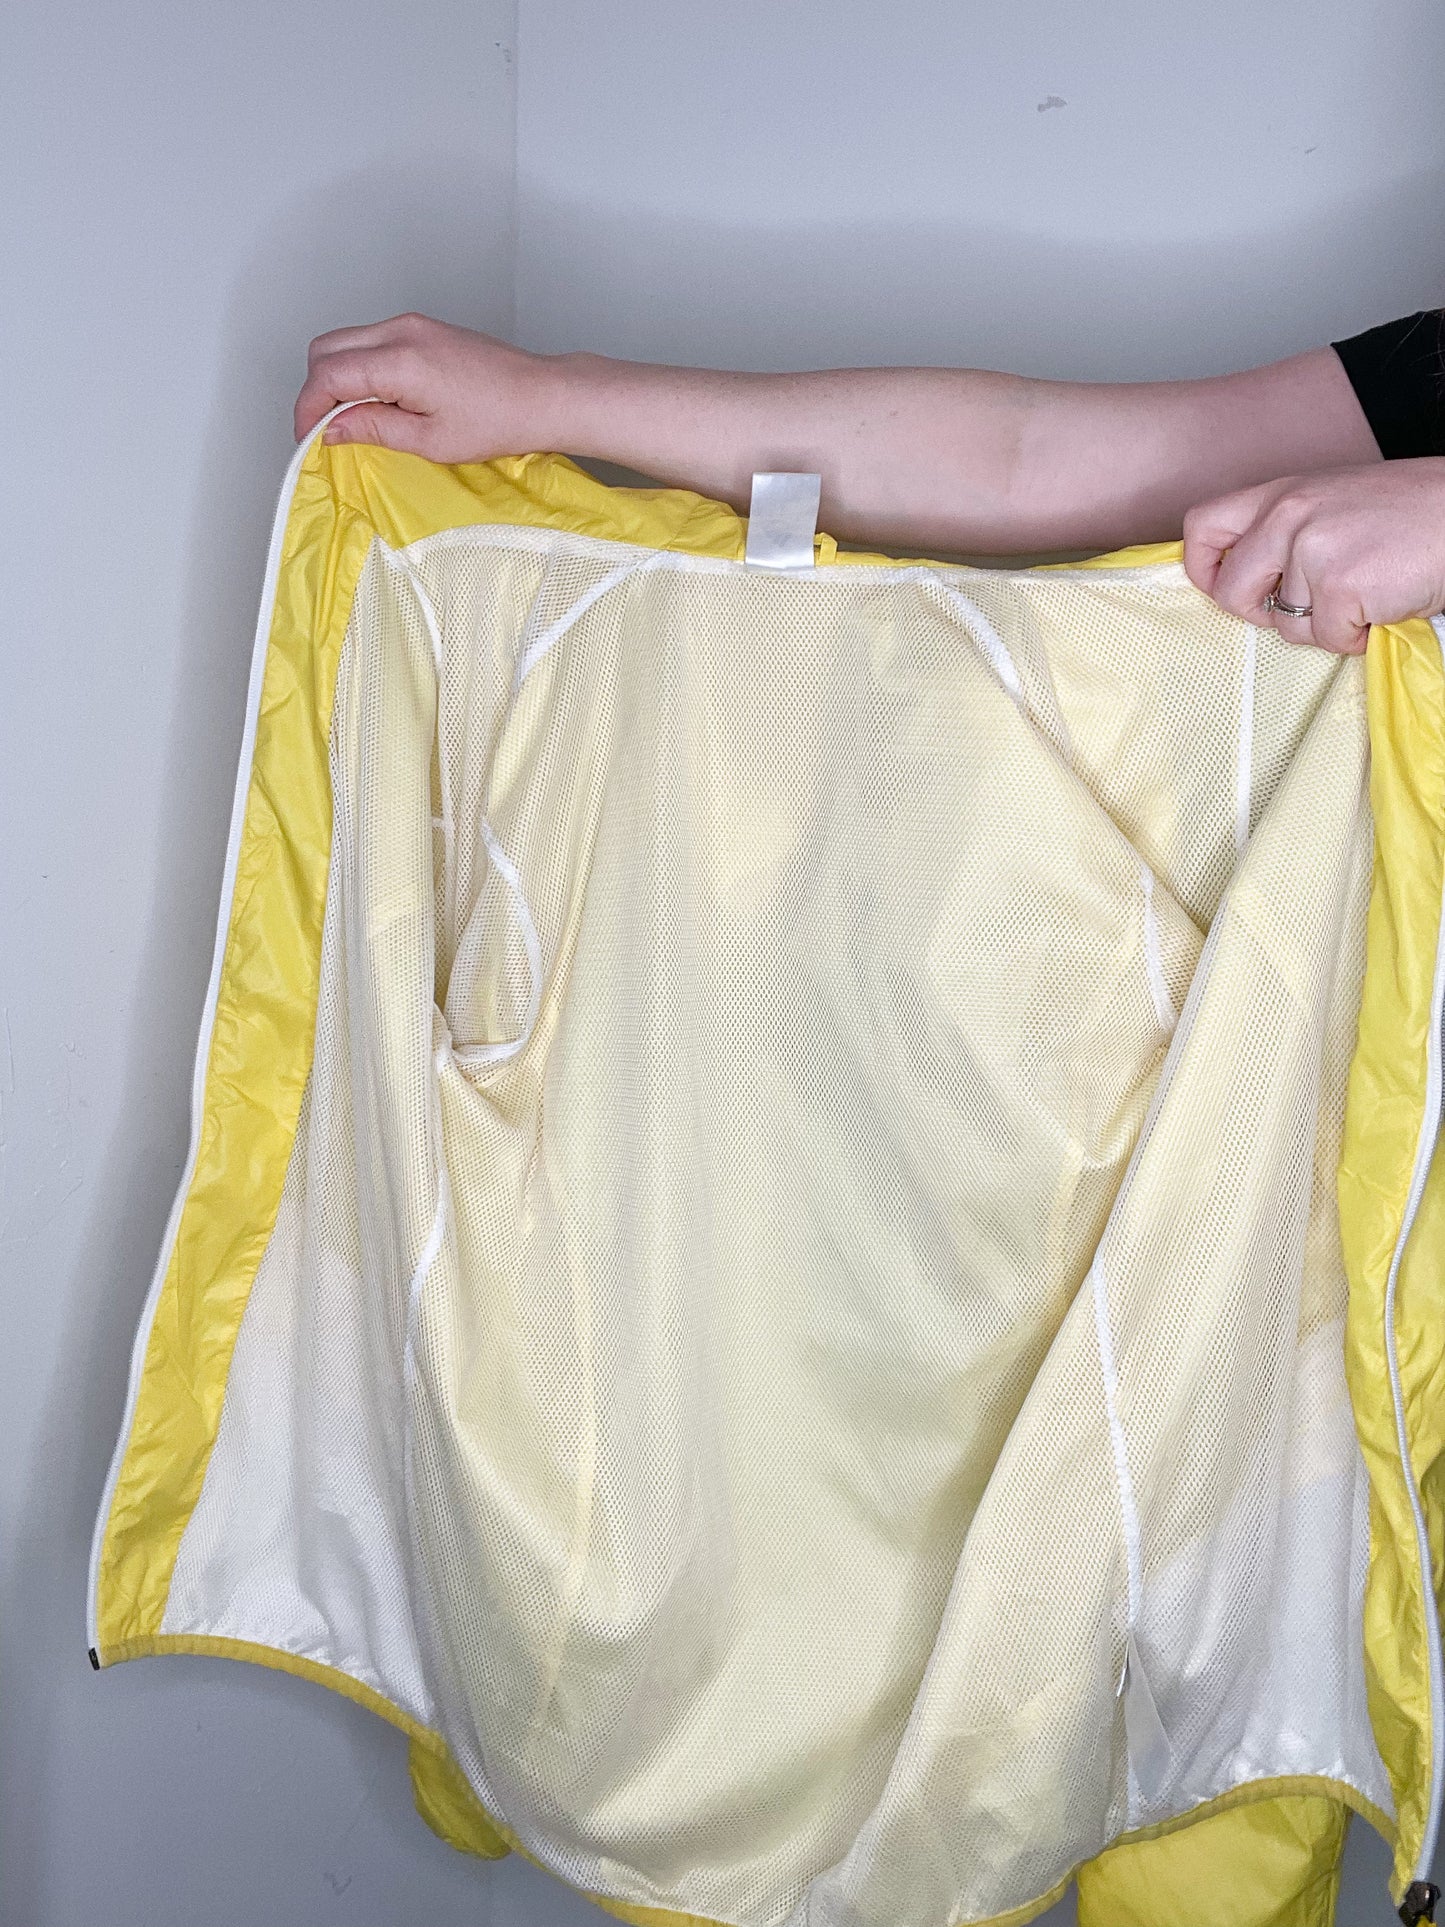 Adidas Yellow Full Zip Nylon Windbreaker Jacket - Small